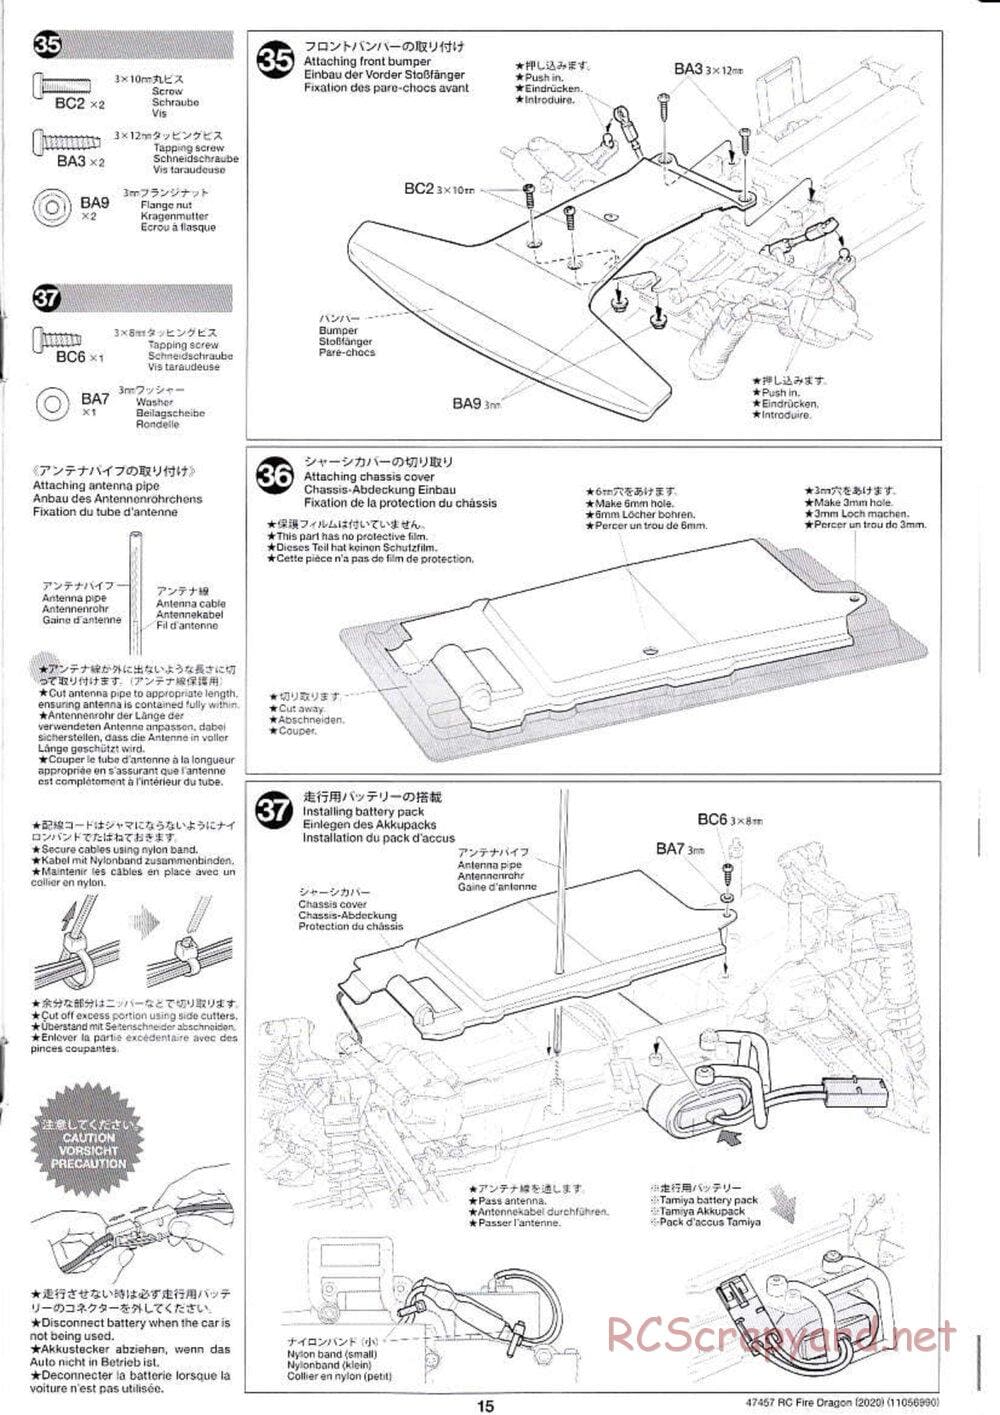 Tamiya - Fire Dragon (2020) Chassis - Manual - Page 15